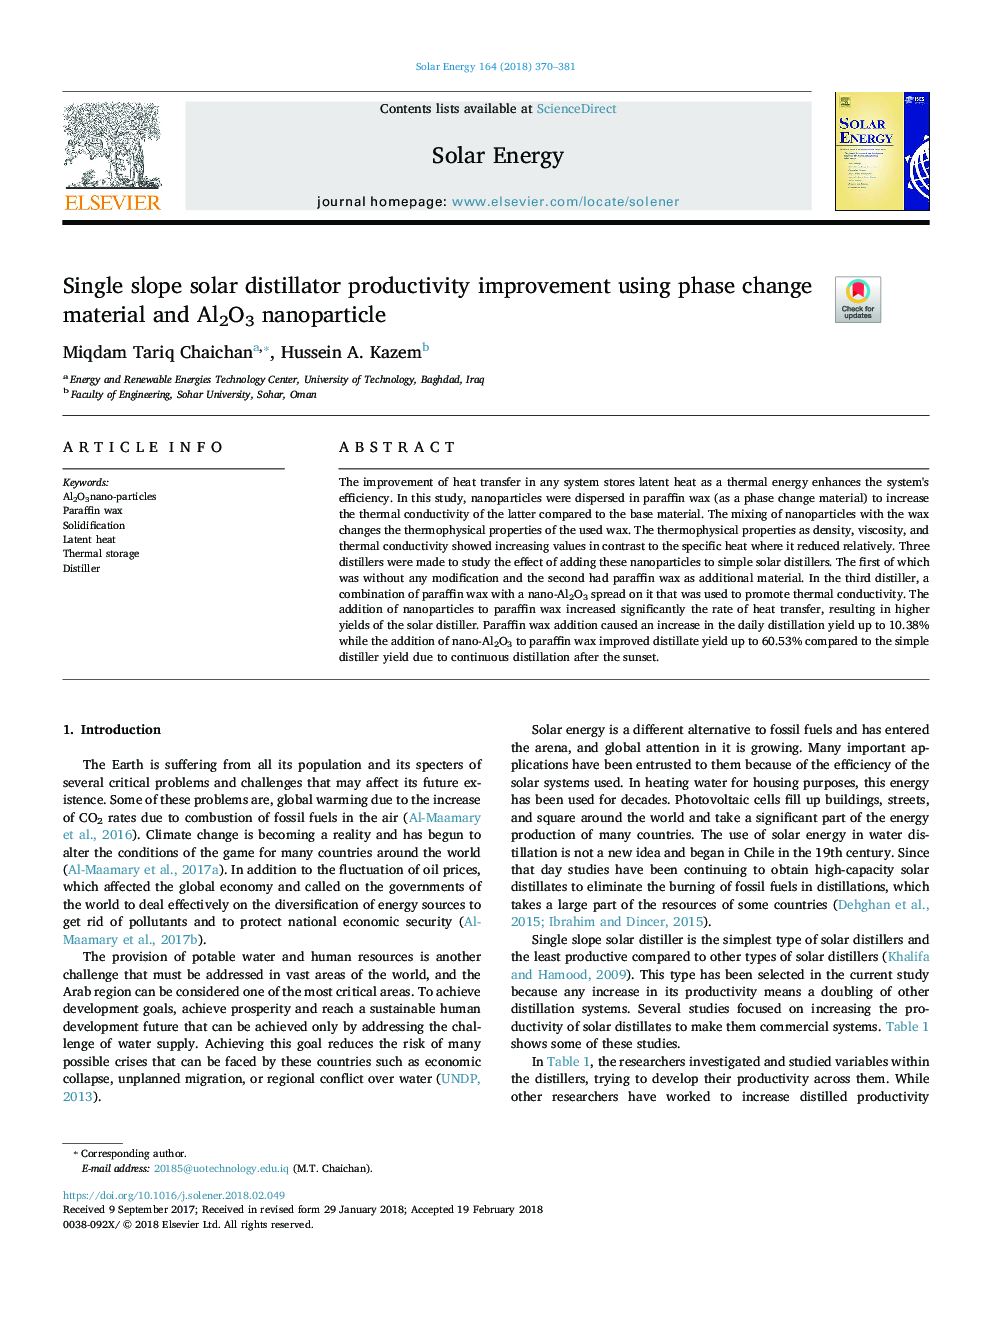 Single slope solar distillator productivity improvement using phase change material and Al2O3 nanoparticle